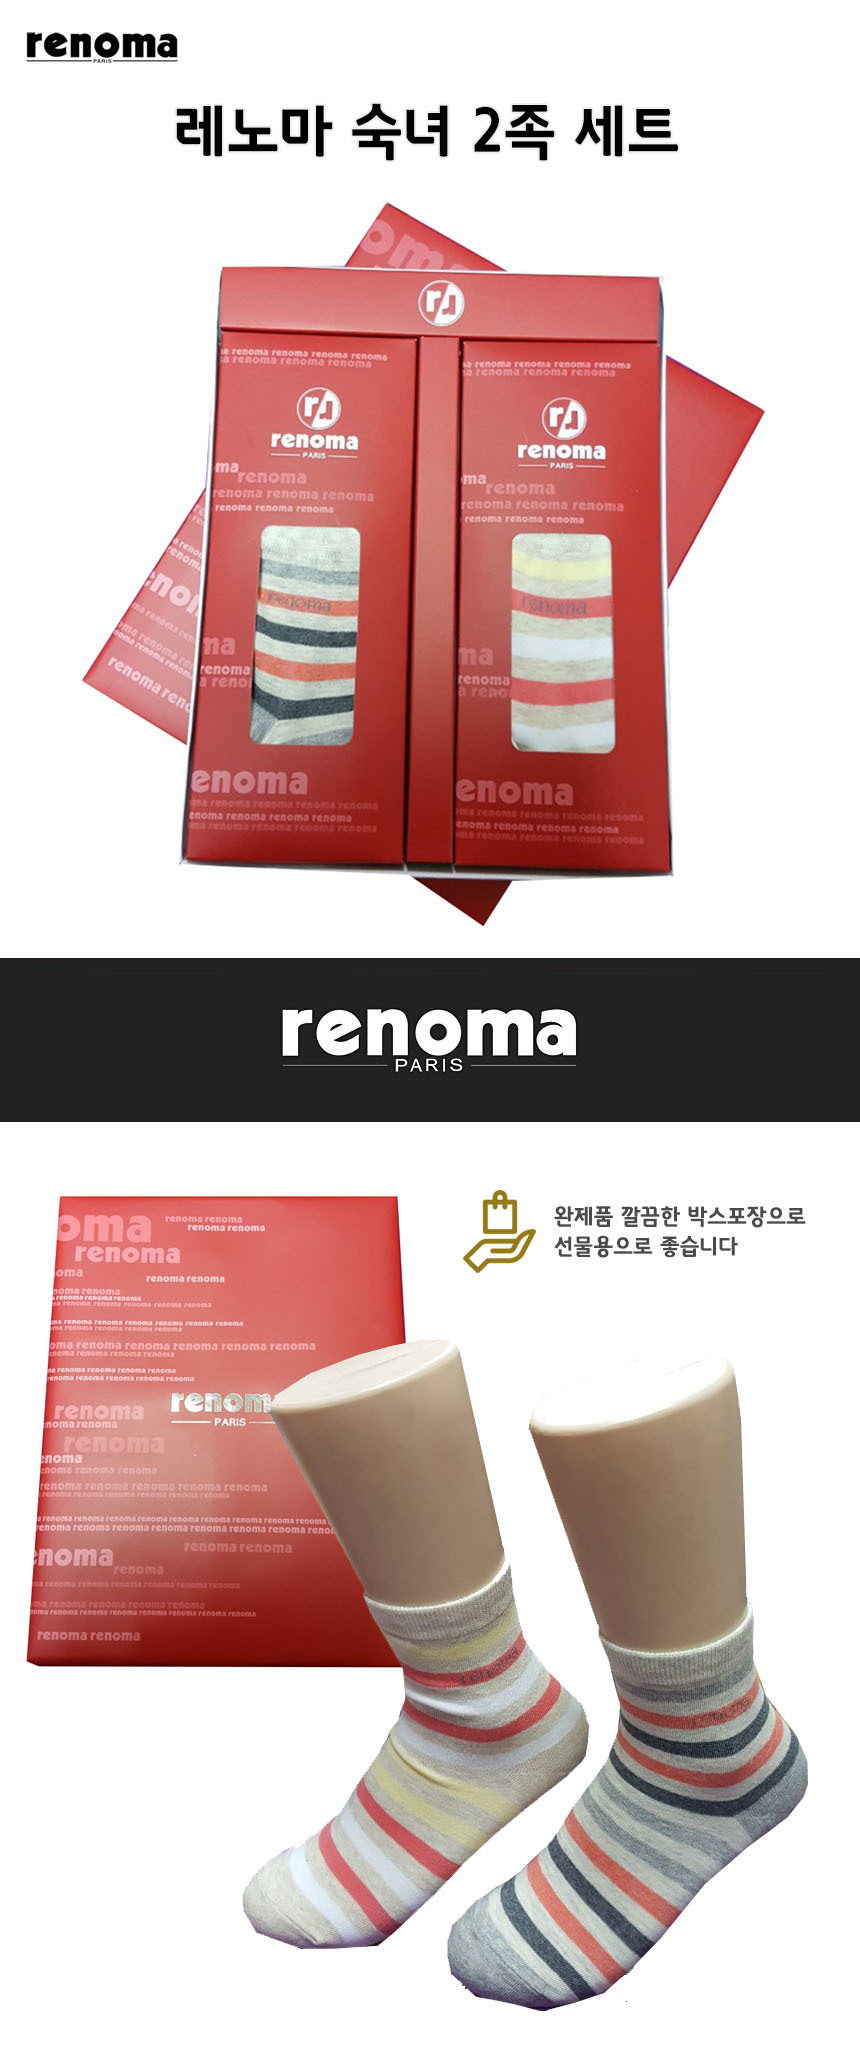 renoma_socks_wm2_1.jpg